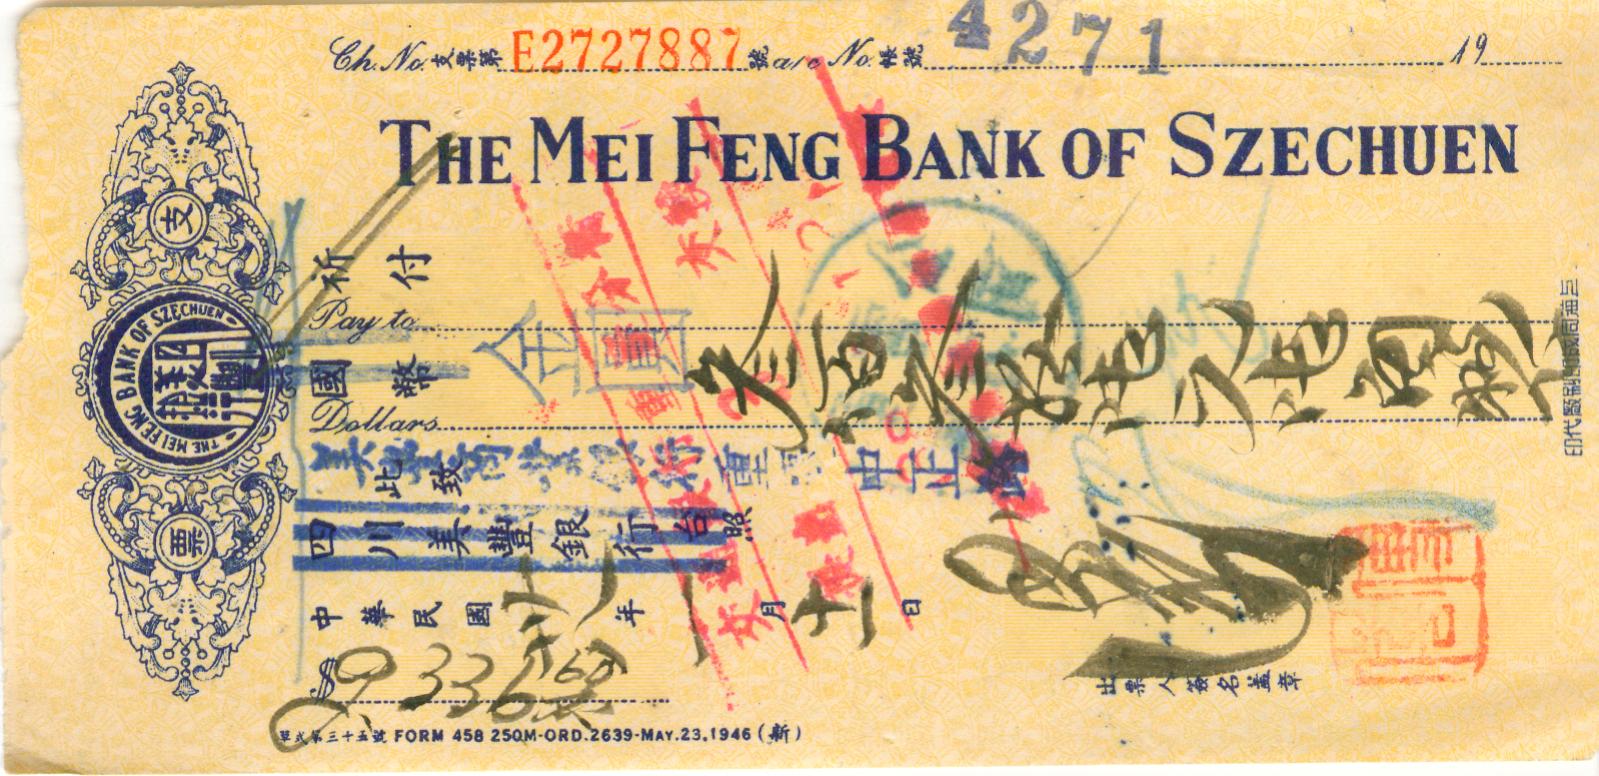 D2230, Check of The Mei Feng Bank of Szechuen, 1949 China